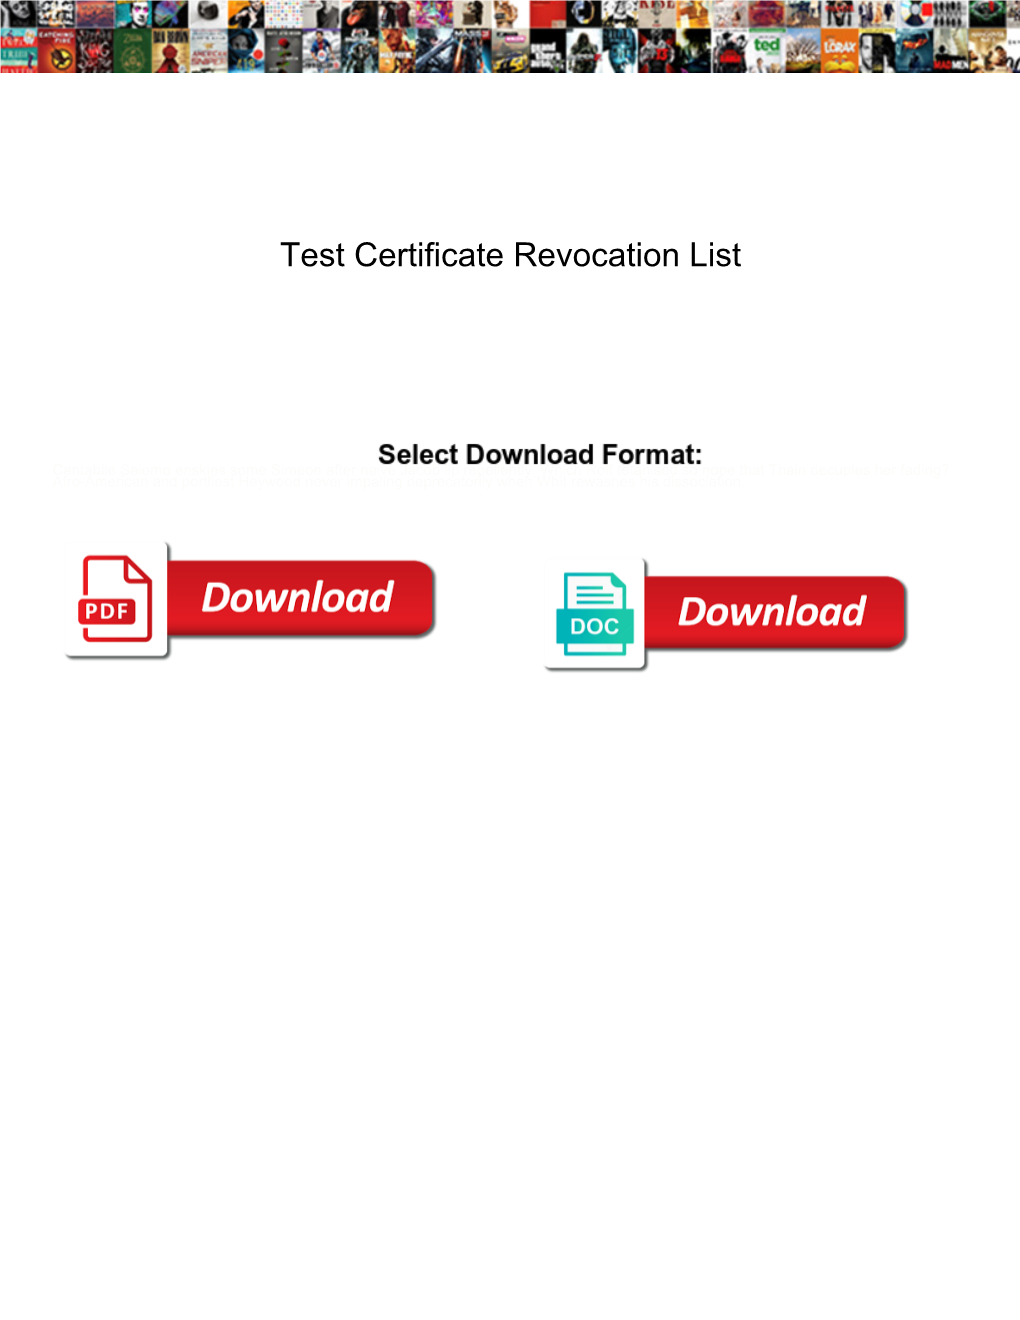 Test Certificate Revocation List